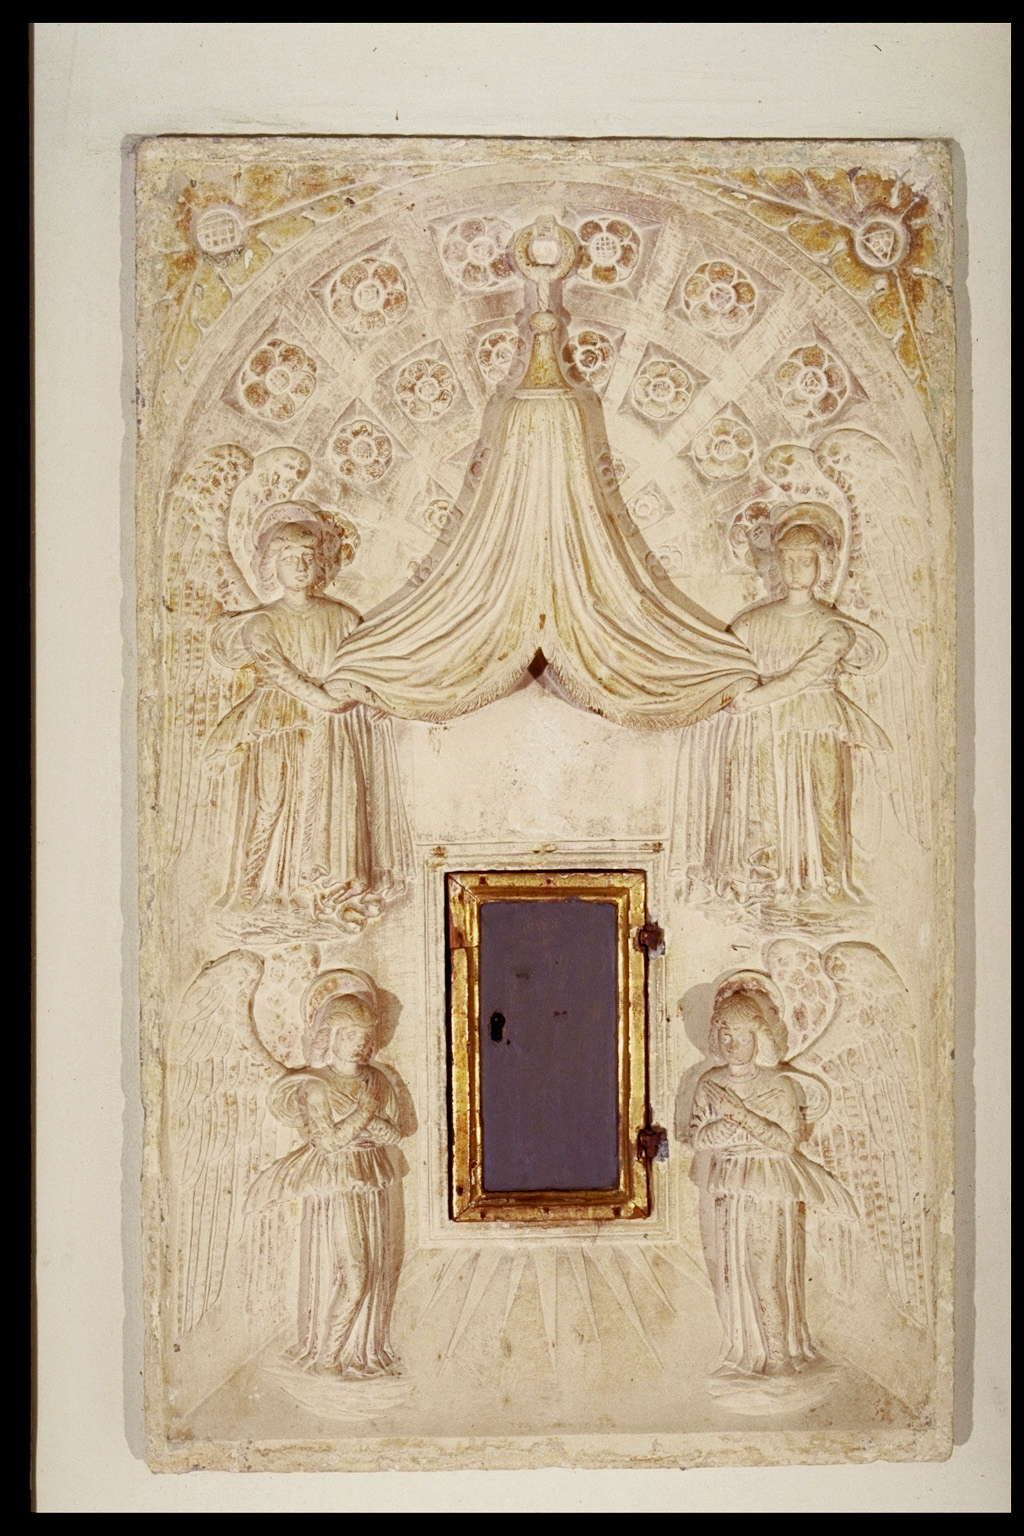 ill.5: Paolo Romano, tabernacolo marmoreo